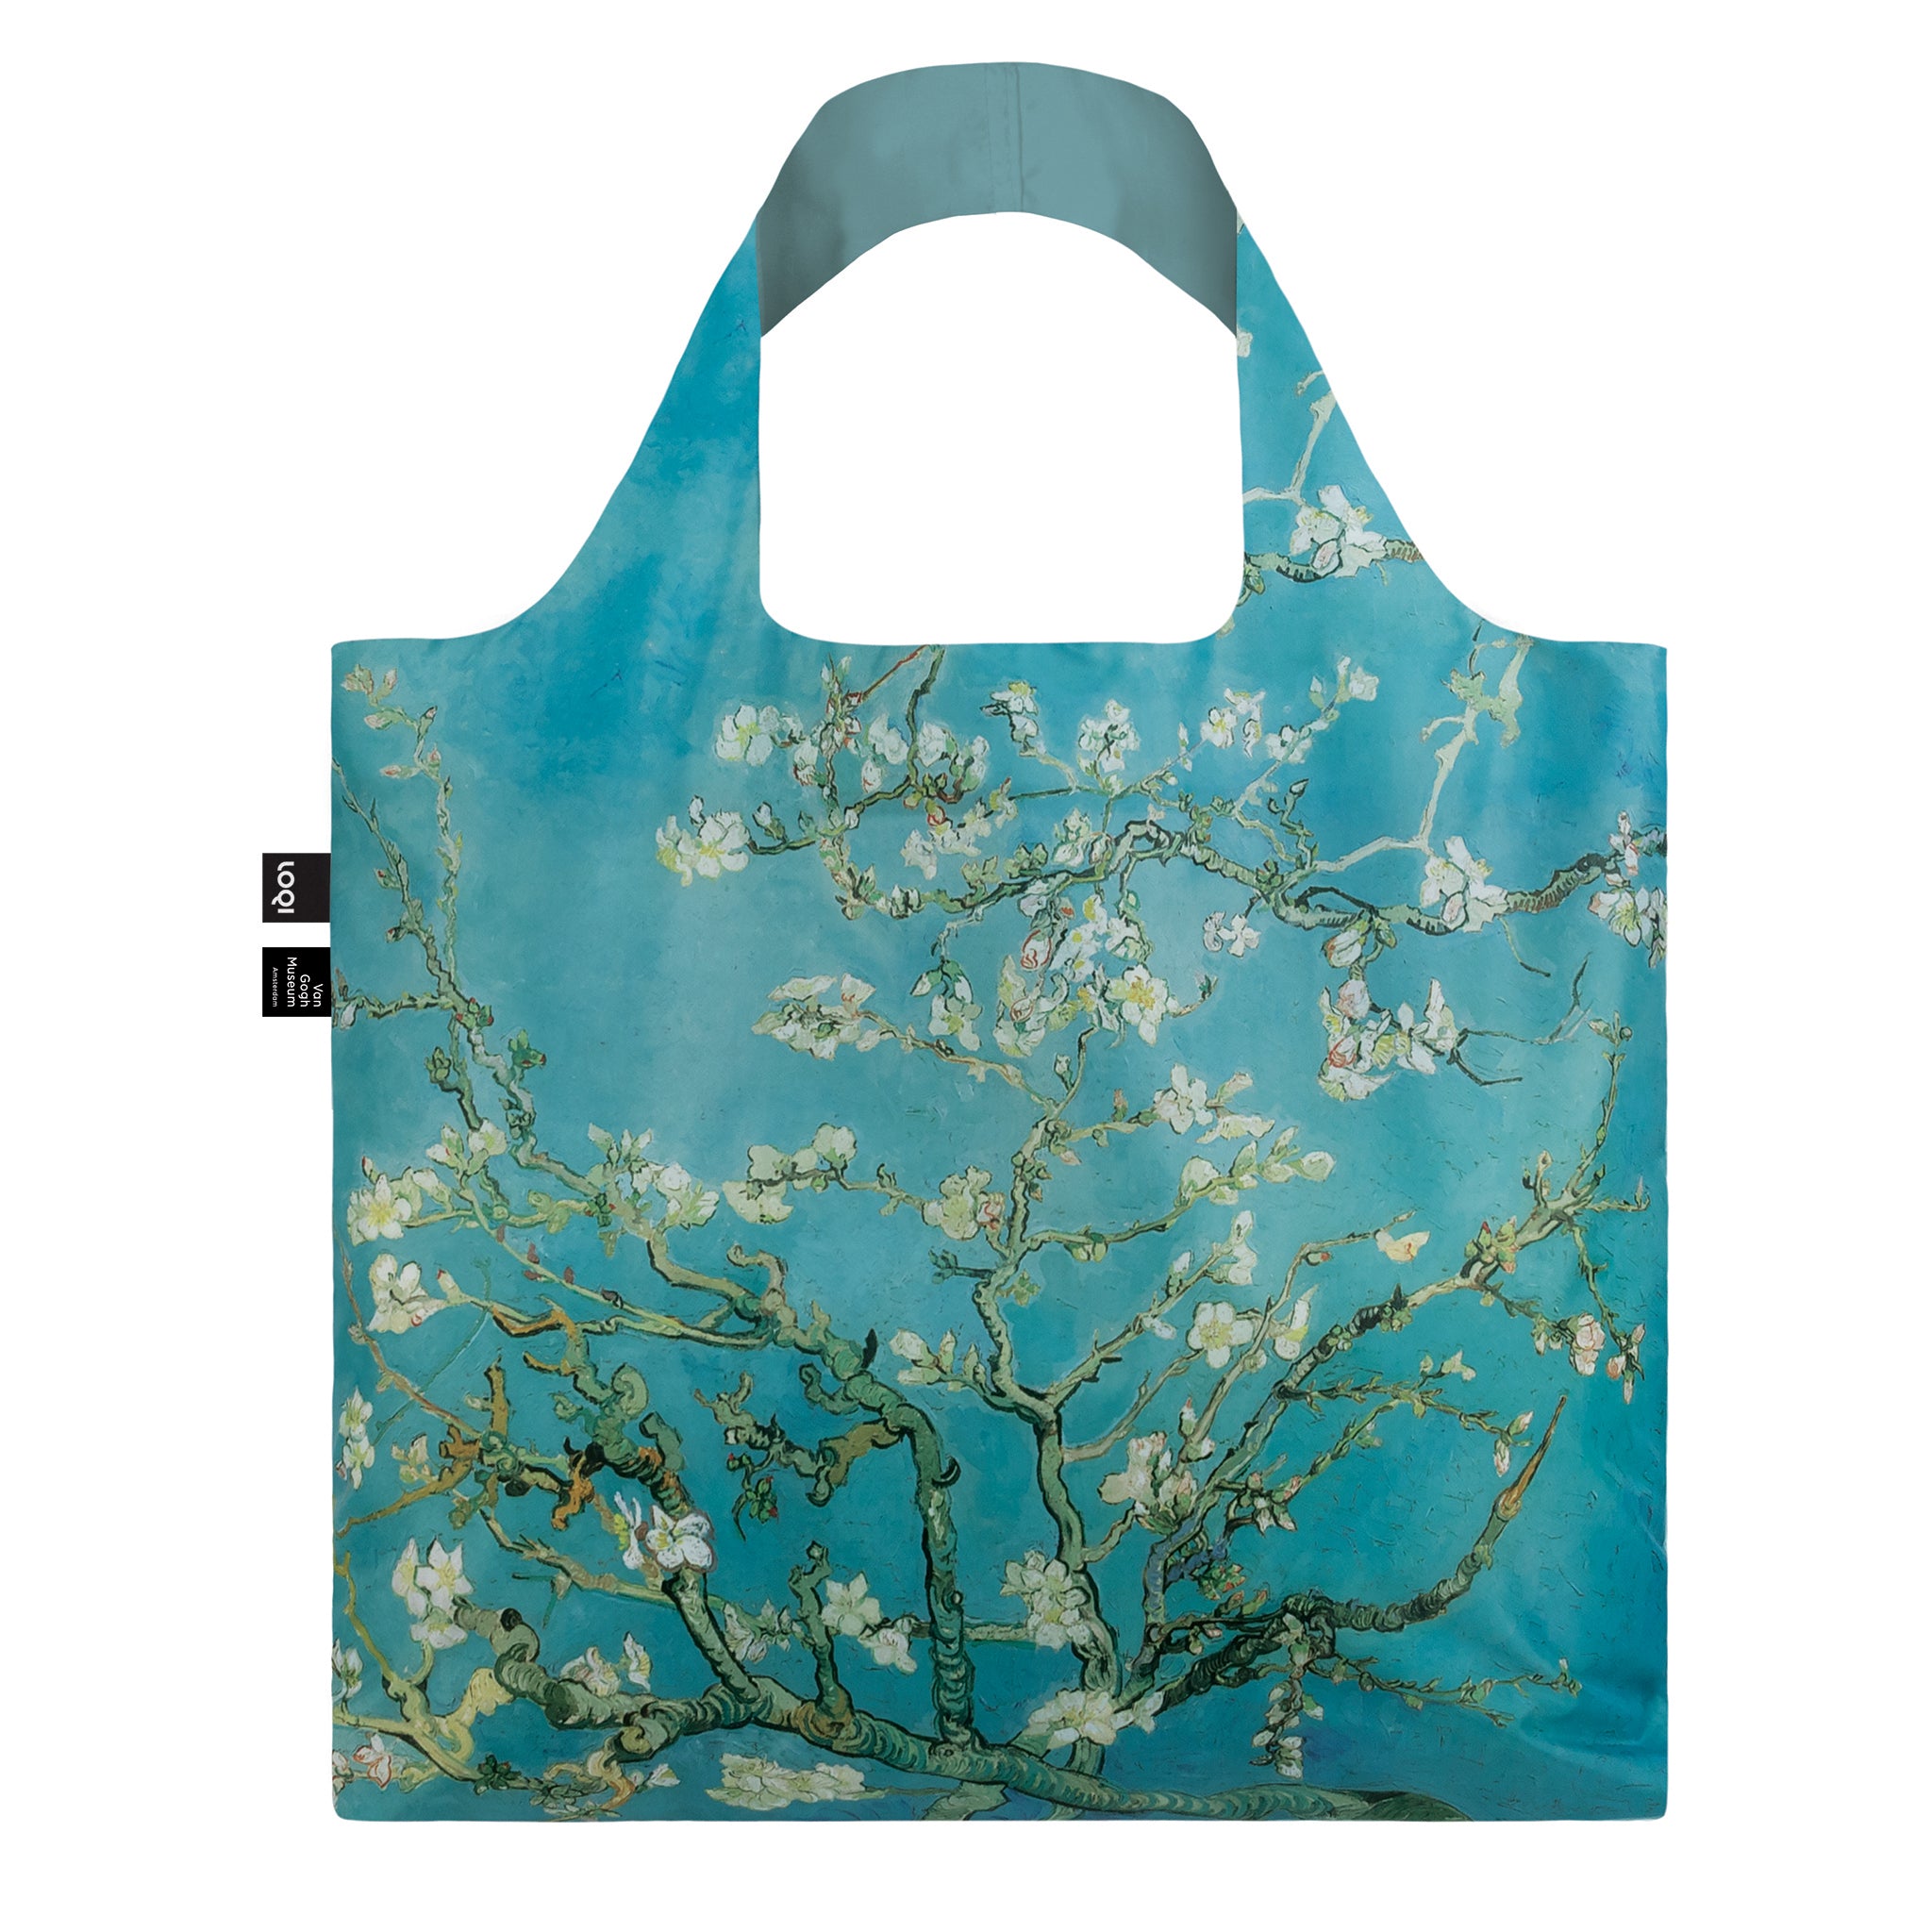 Tote Bag - Almond Blossom - Van Gogh